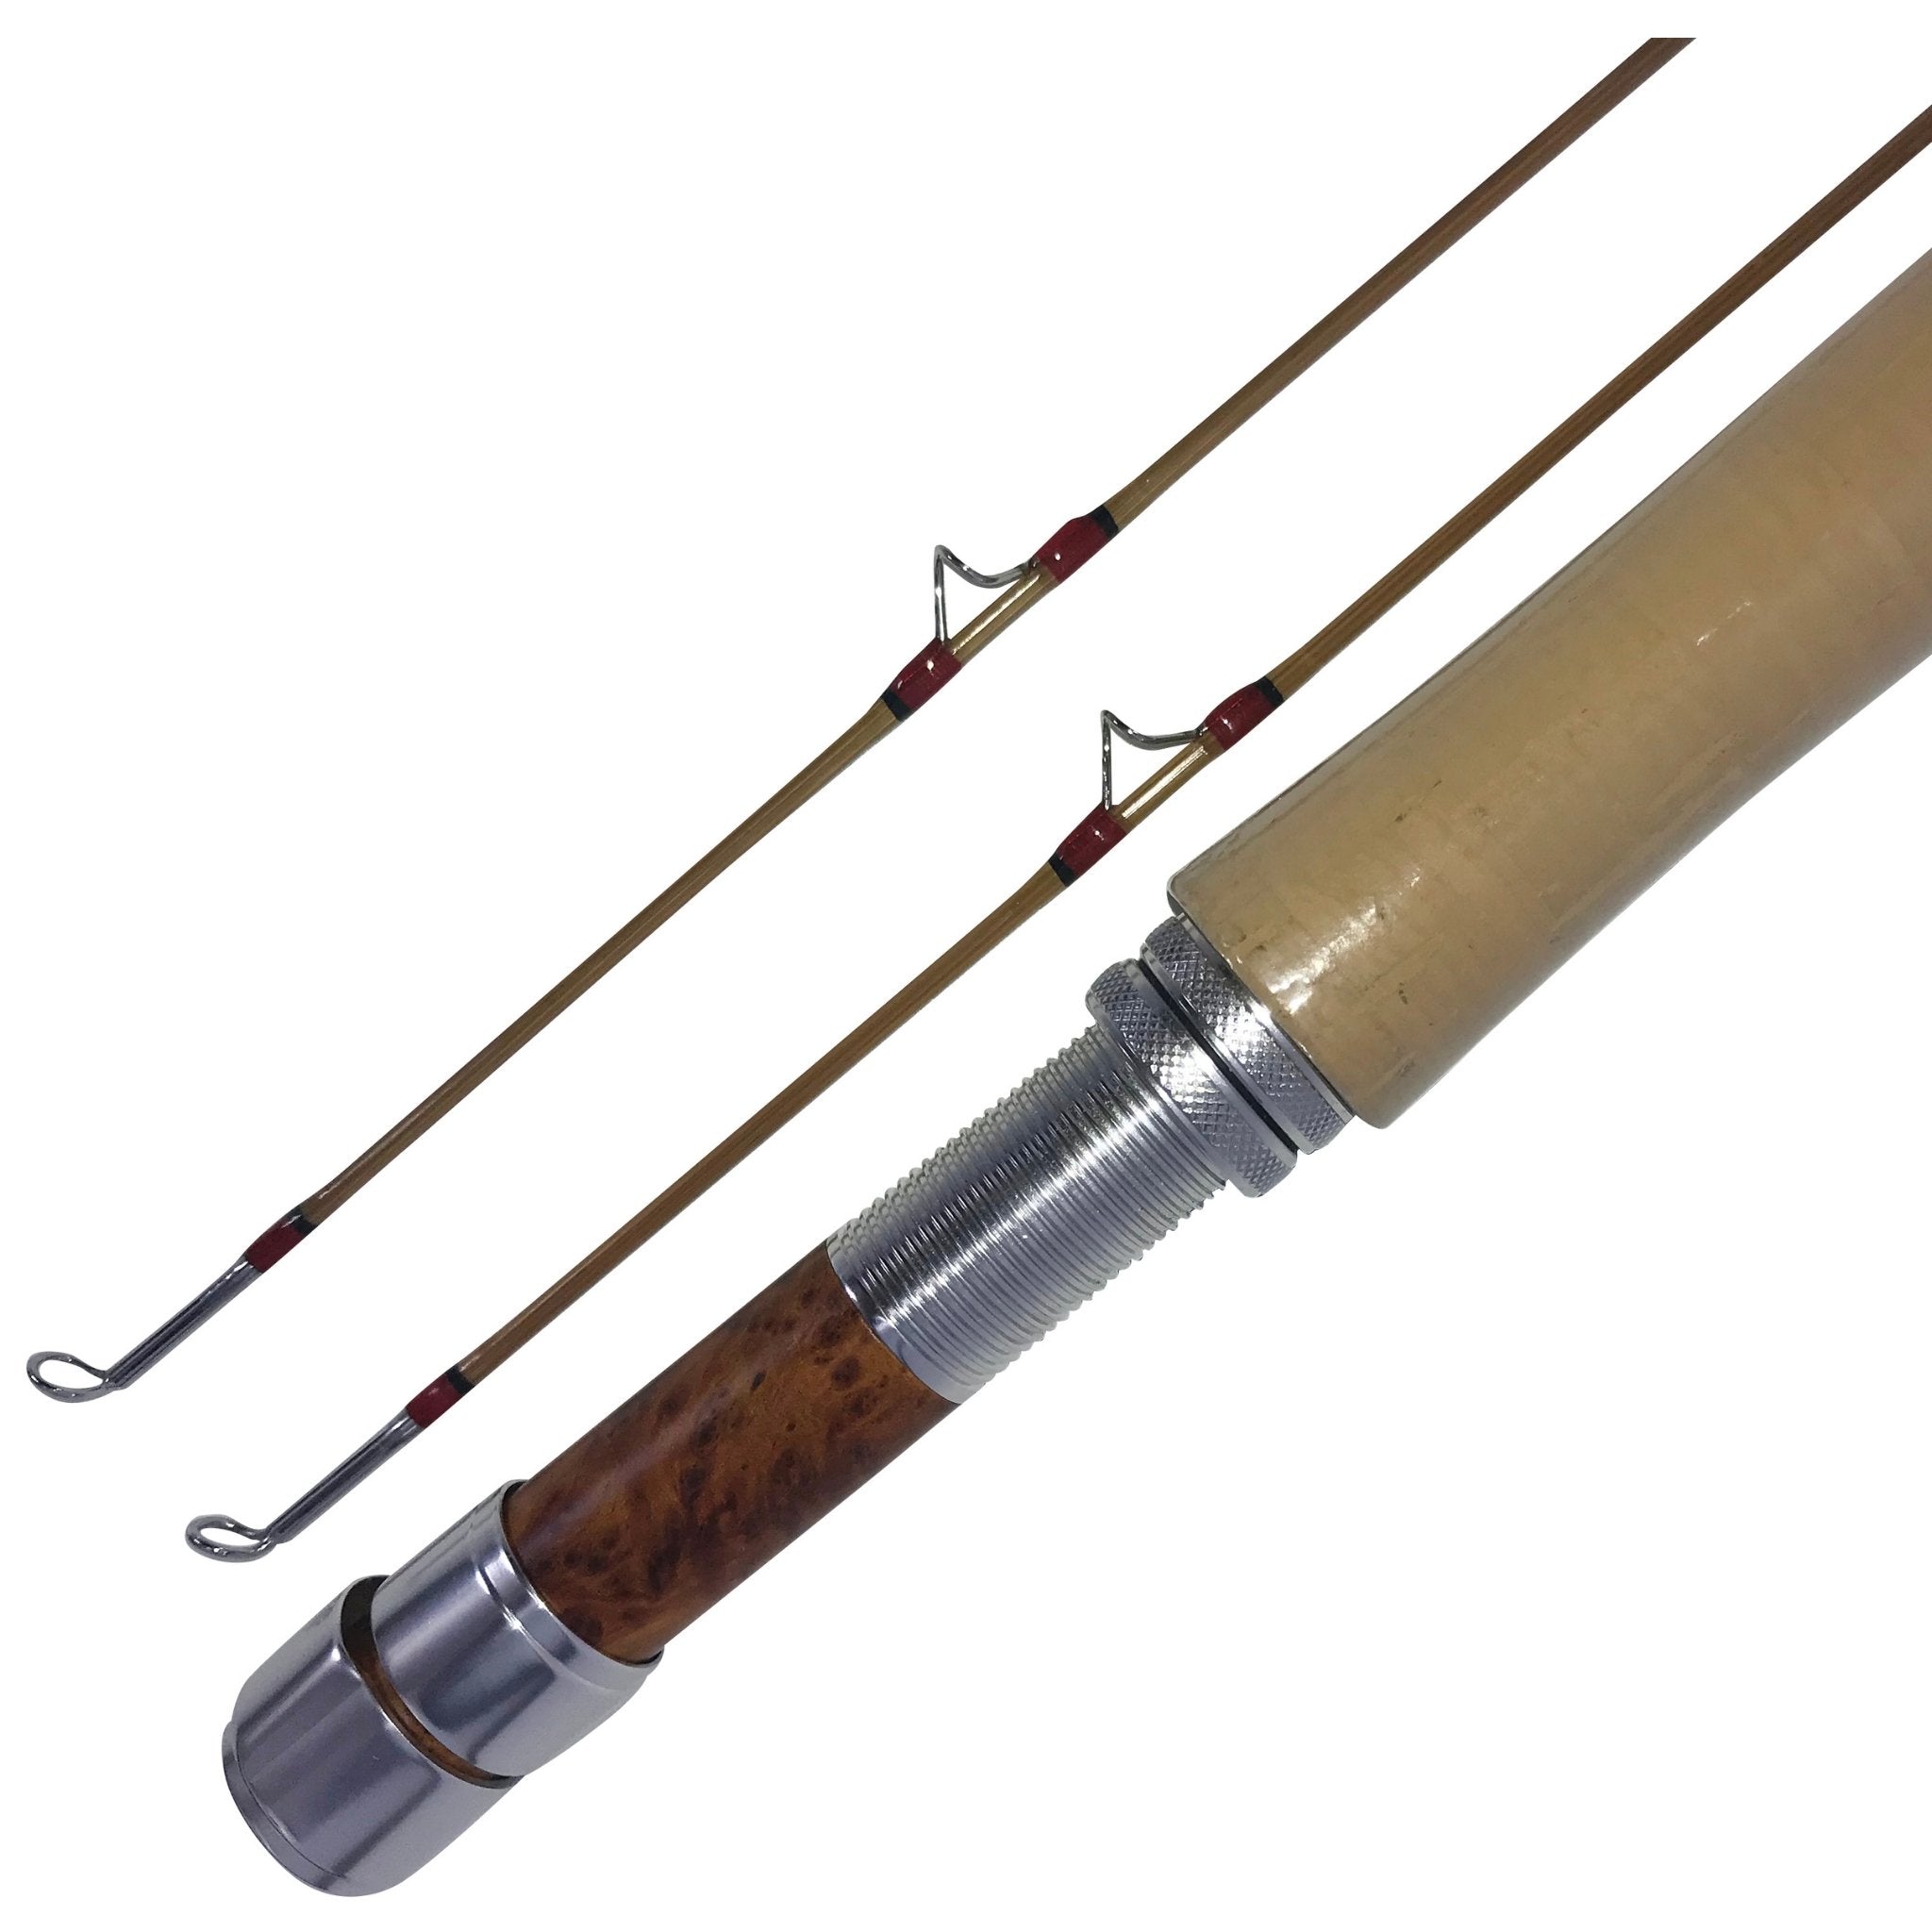 The Deschutes 8' 0 6-wt Medium Action Bamboo Fly Rod